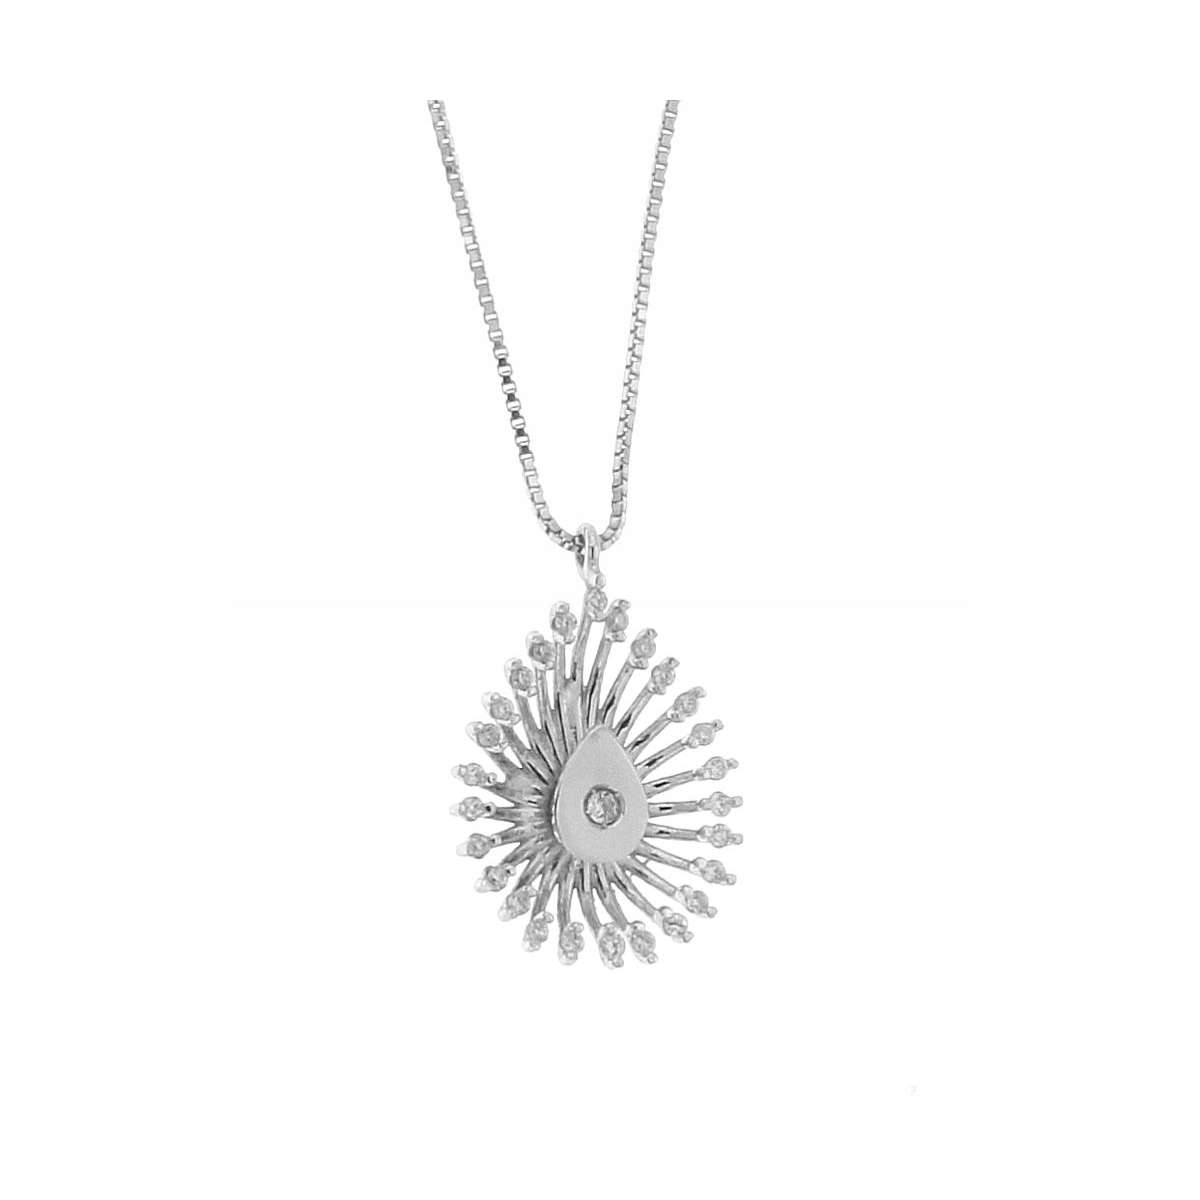 Tear-drop necklace 0.15 carats diamonds G-VS1